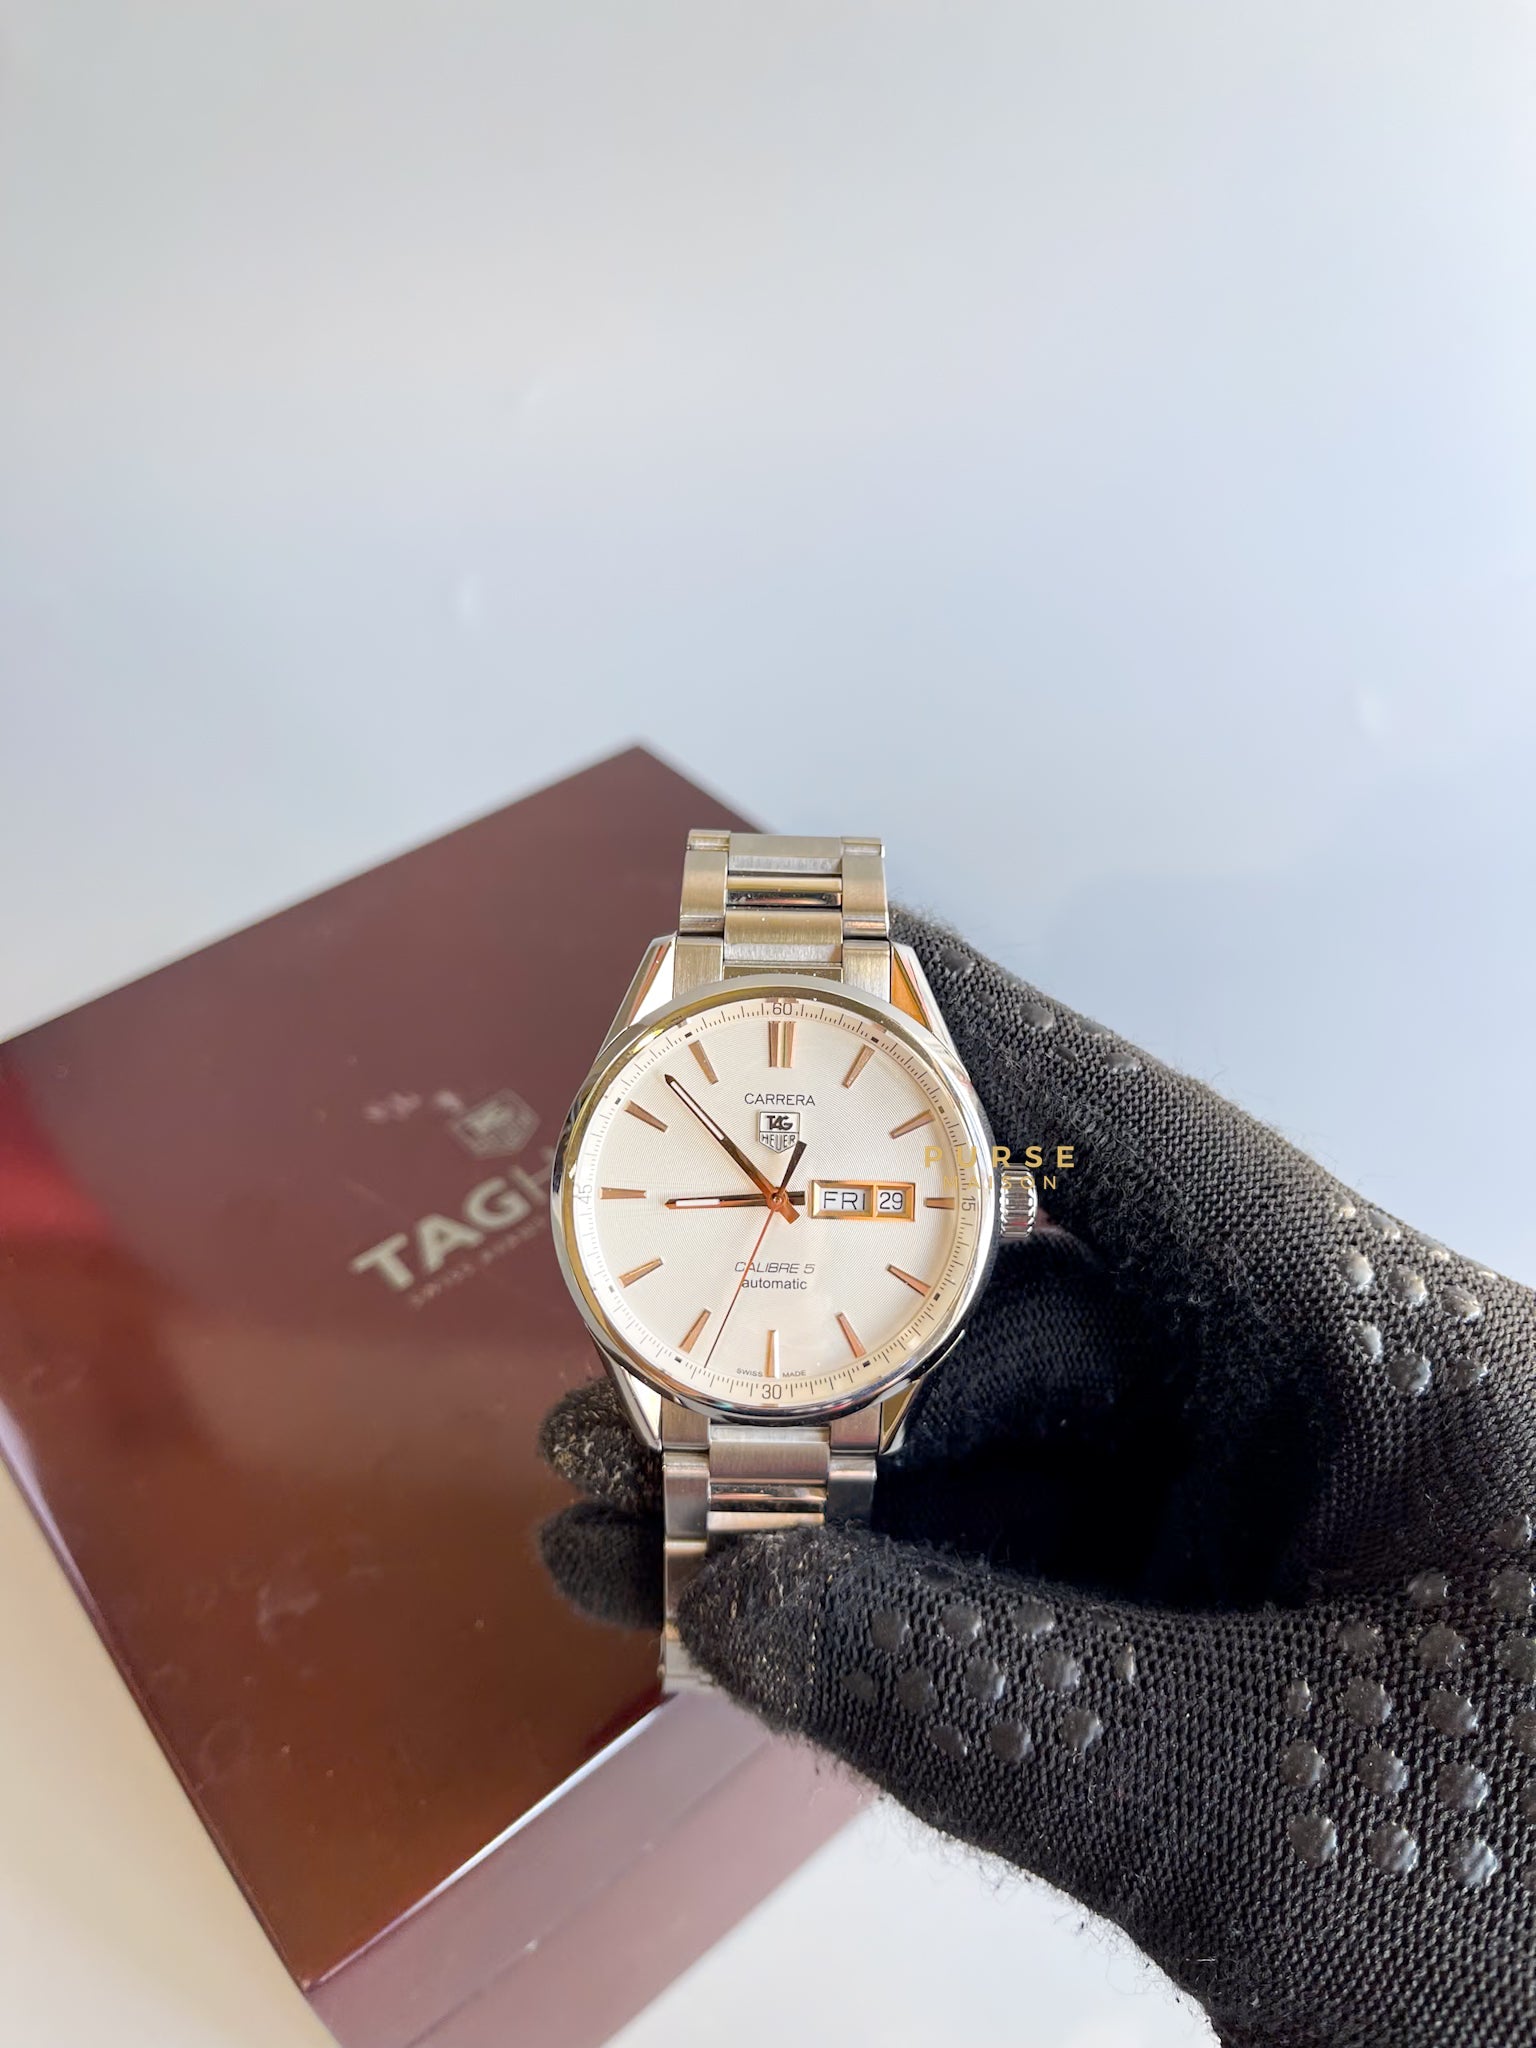 TAGHeuer Carrera Calibre 5 Automatic Silver Watch | Purse Maison Luxury Bags Shop